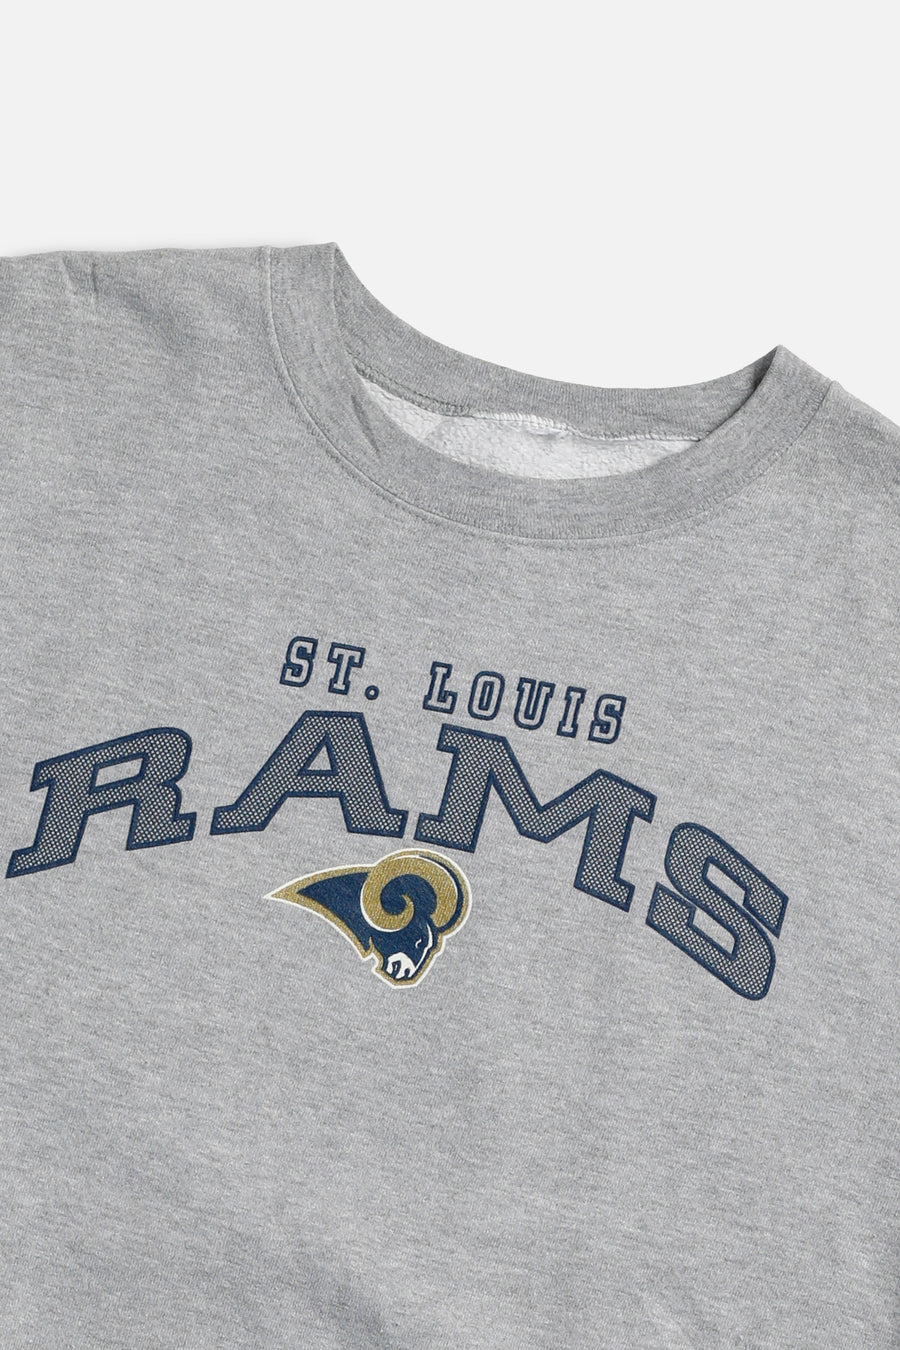 Vintage St. Louis Rams NFL Sweatshirt - L